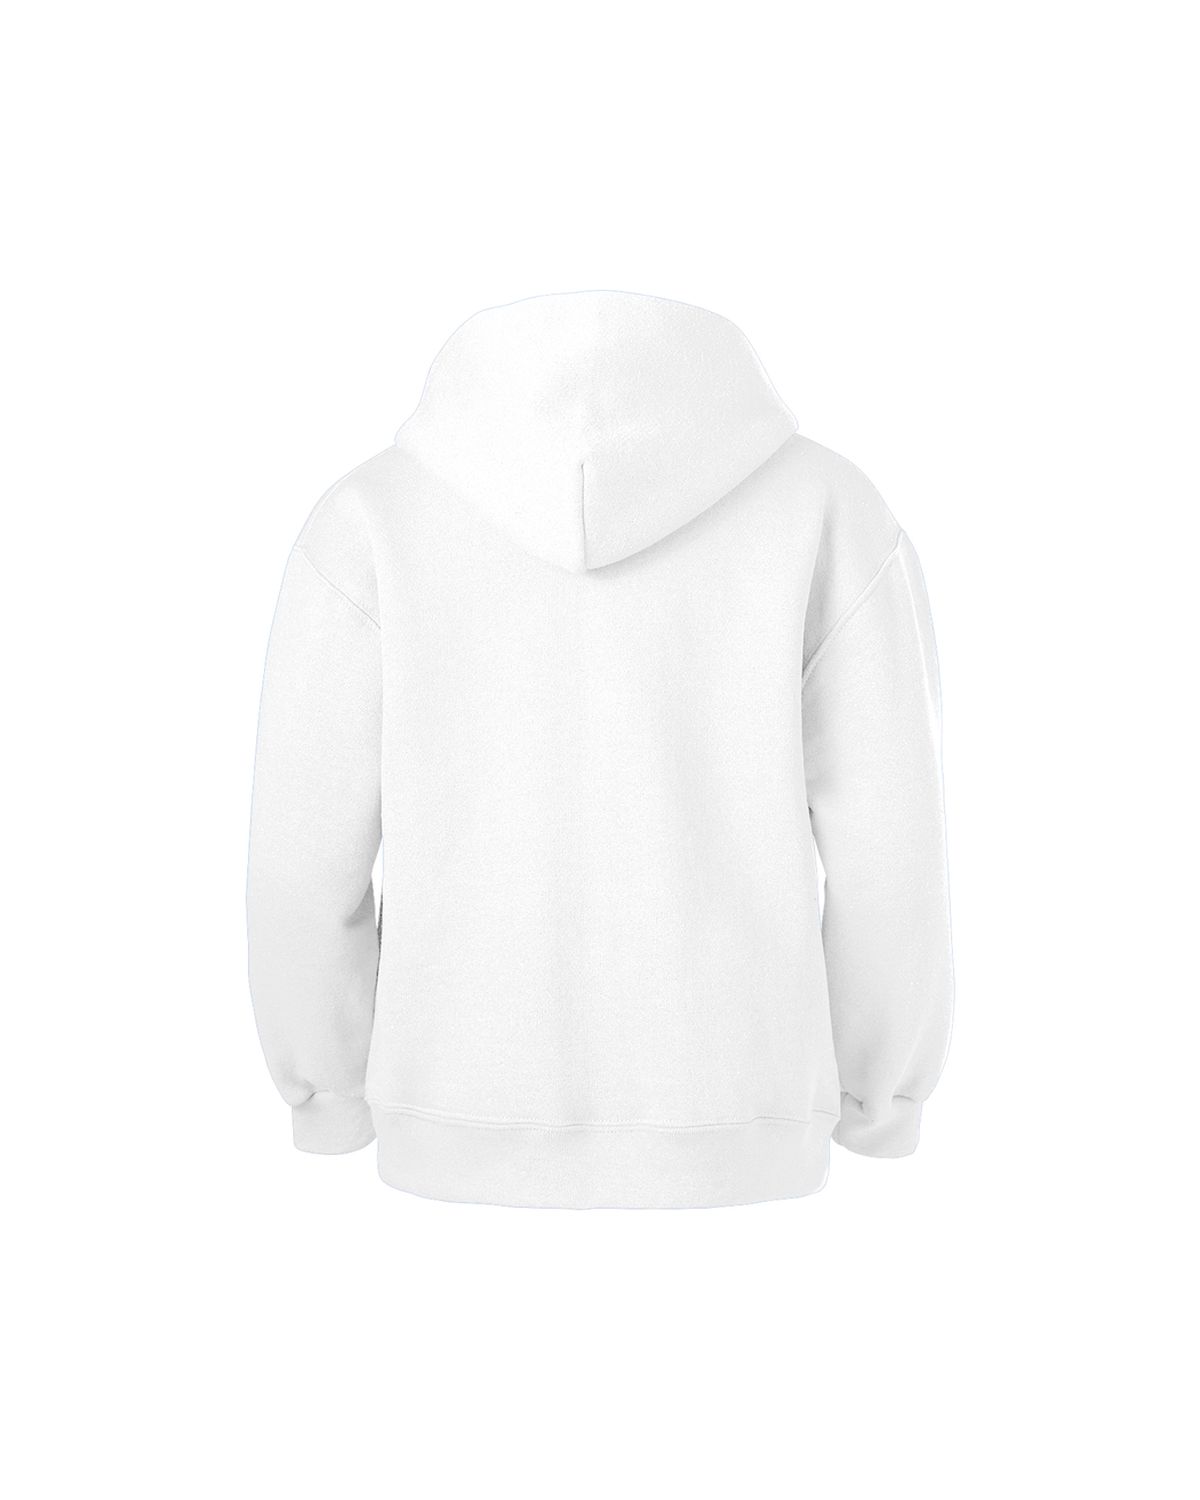 'Soffe B9289 Youth Classic Hooded Sweatshirt'